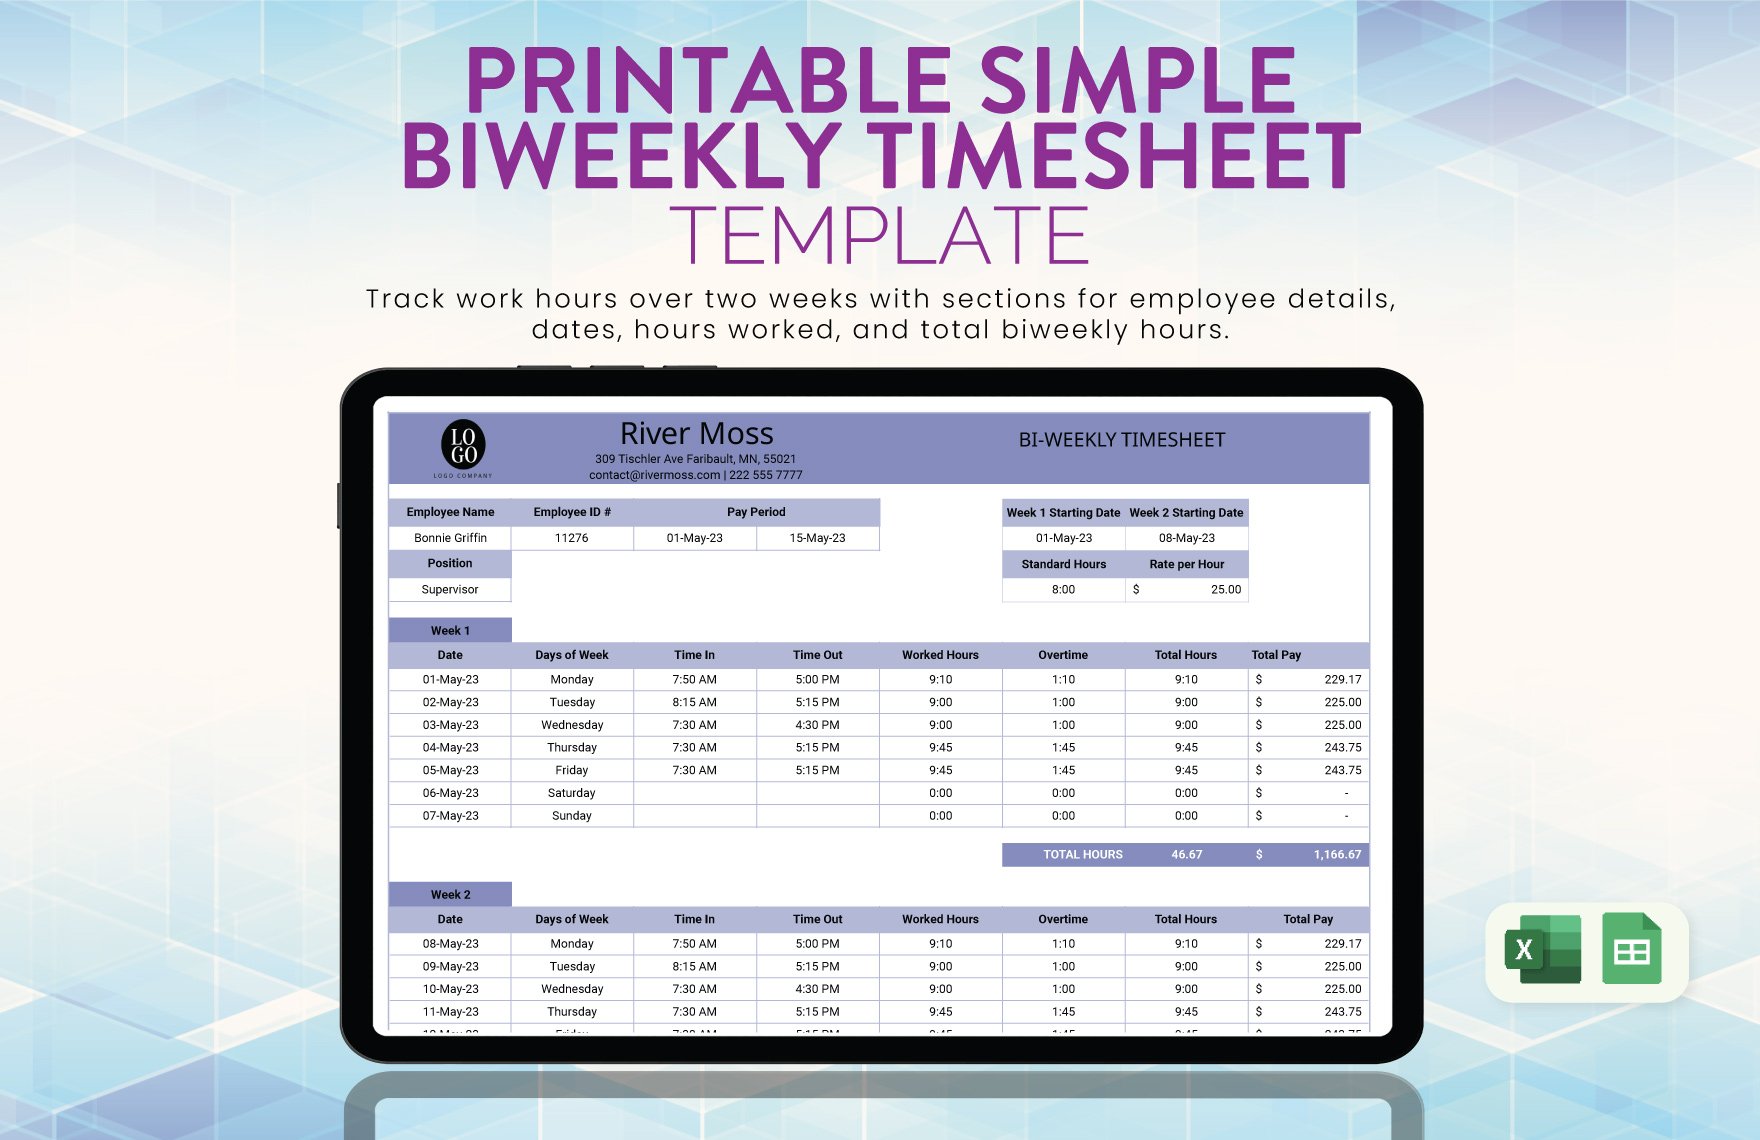 Printable Simple Biweekly Timesheet Template in Excel, Google Sheets